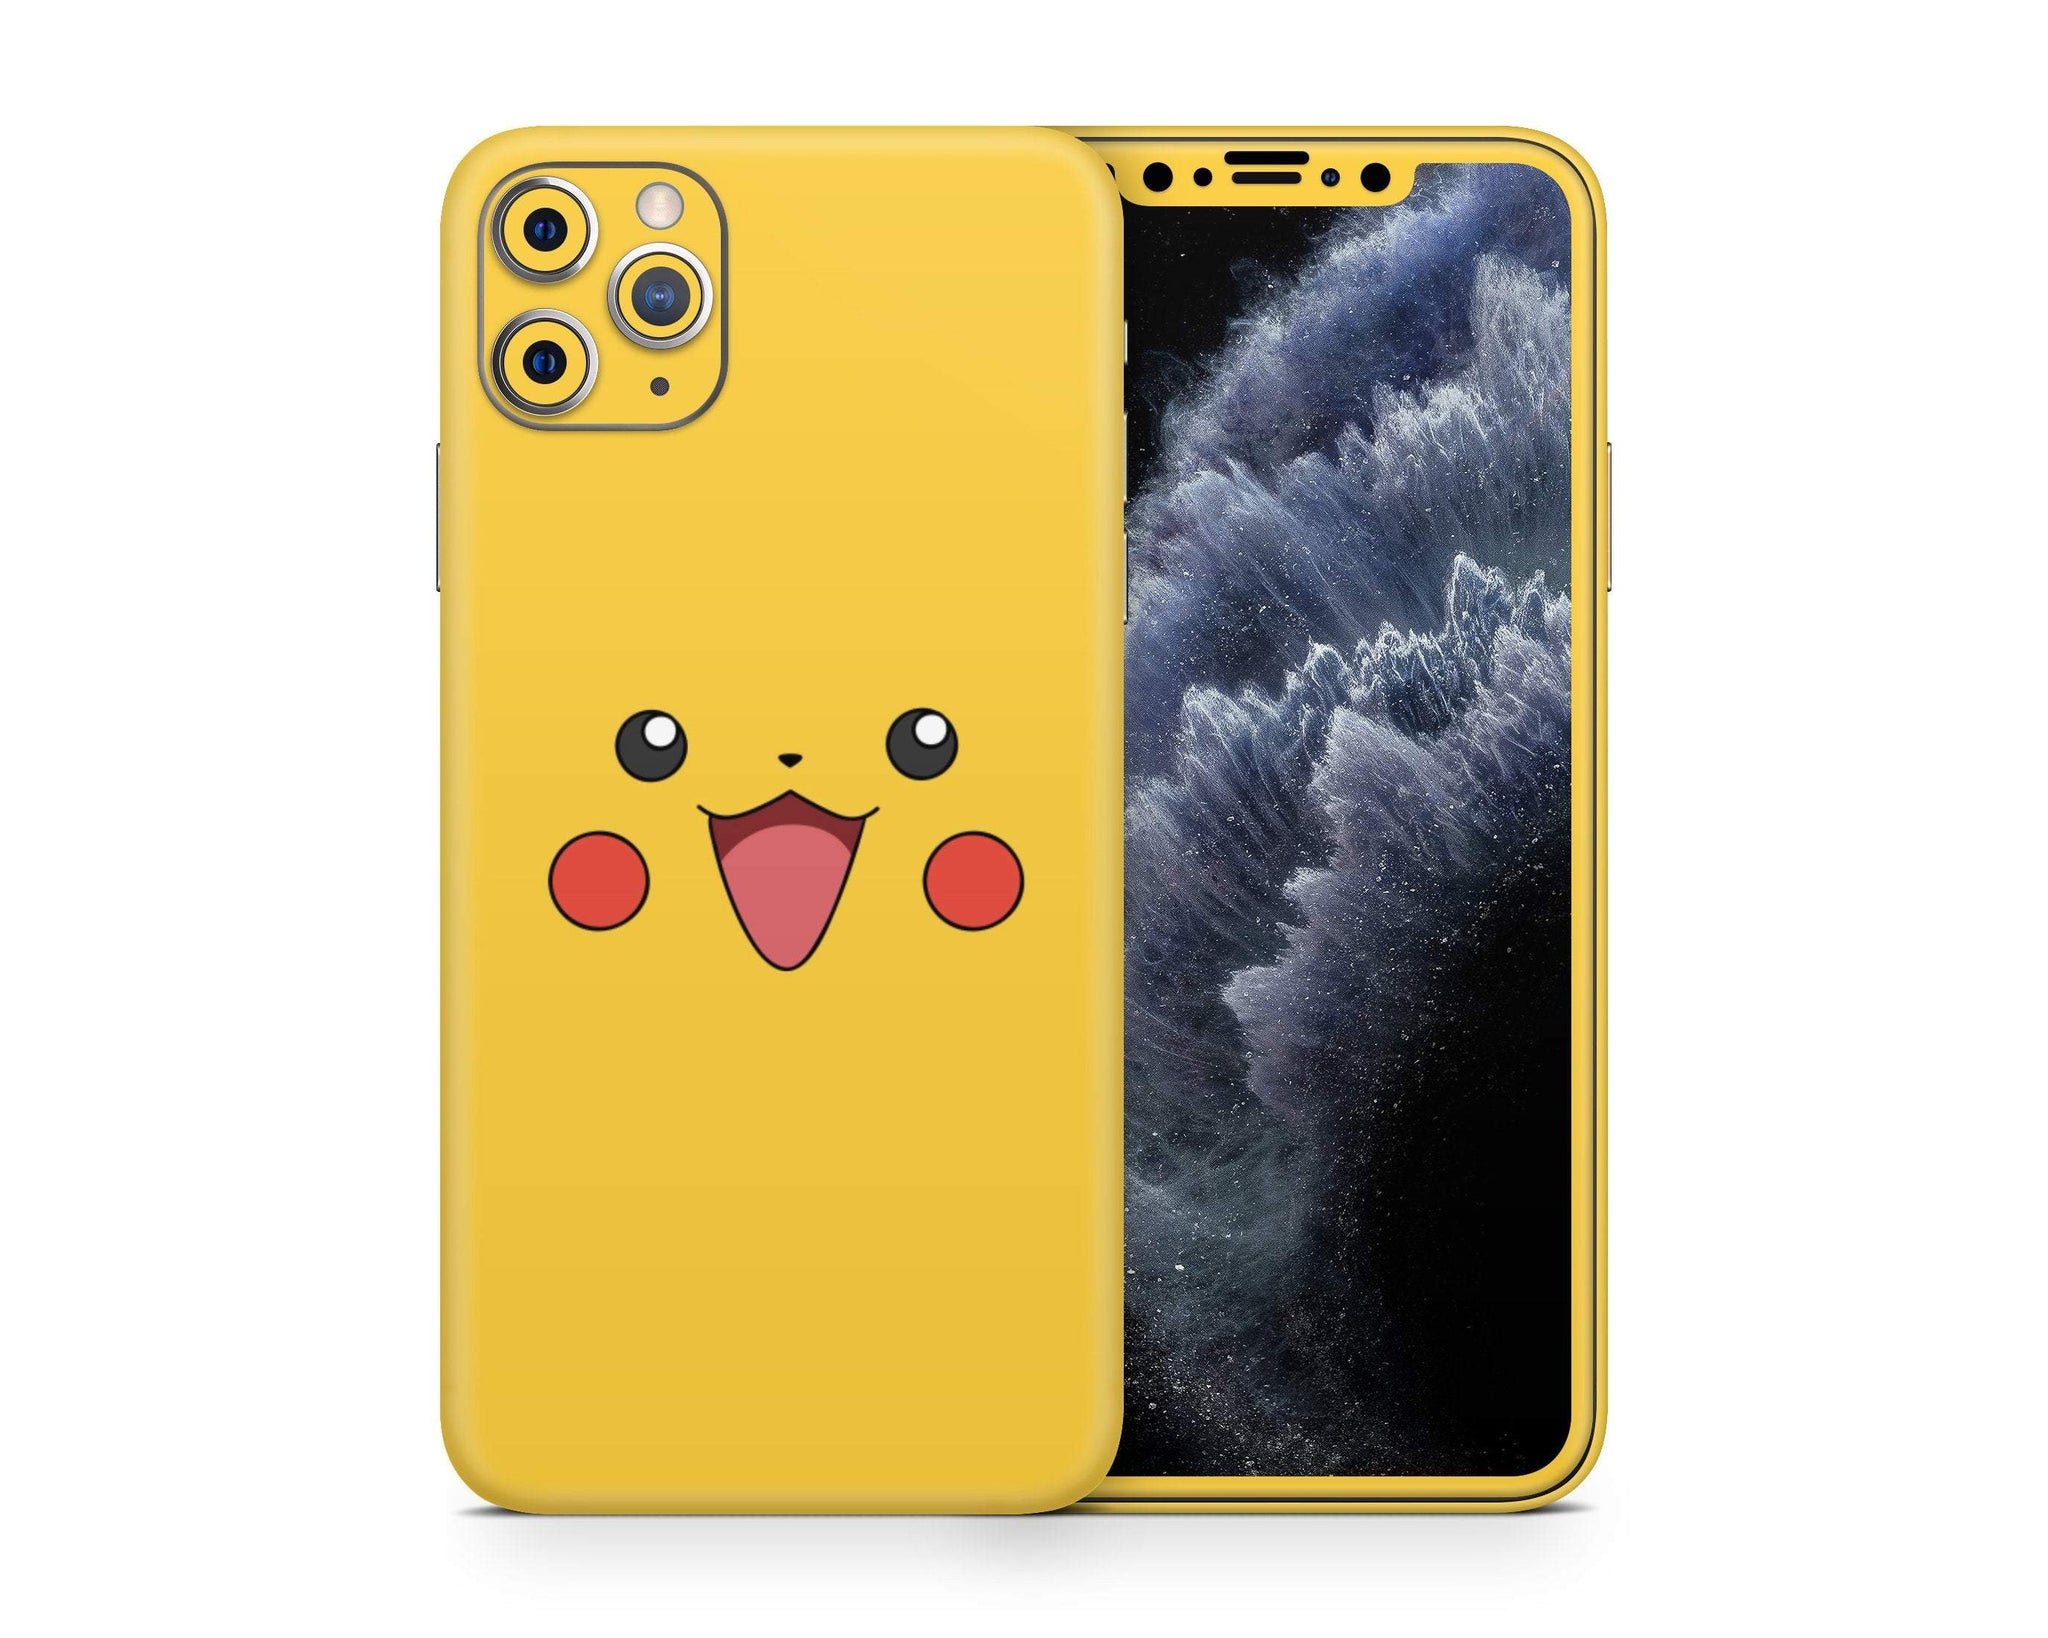 Cute Pikachu Face Iphone Skin Sticker Vinyl Bundle Labotech